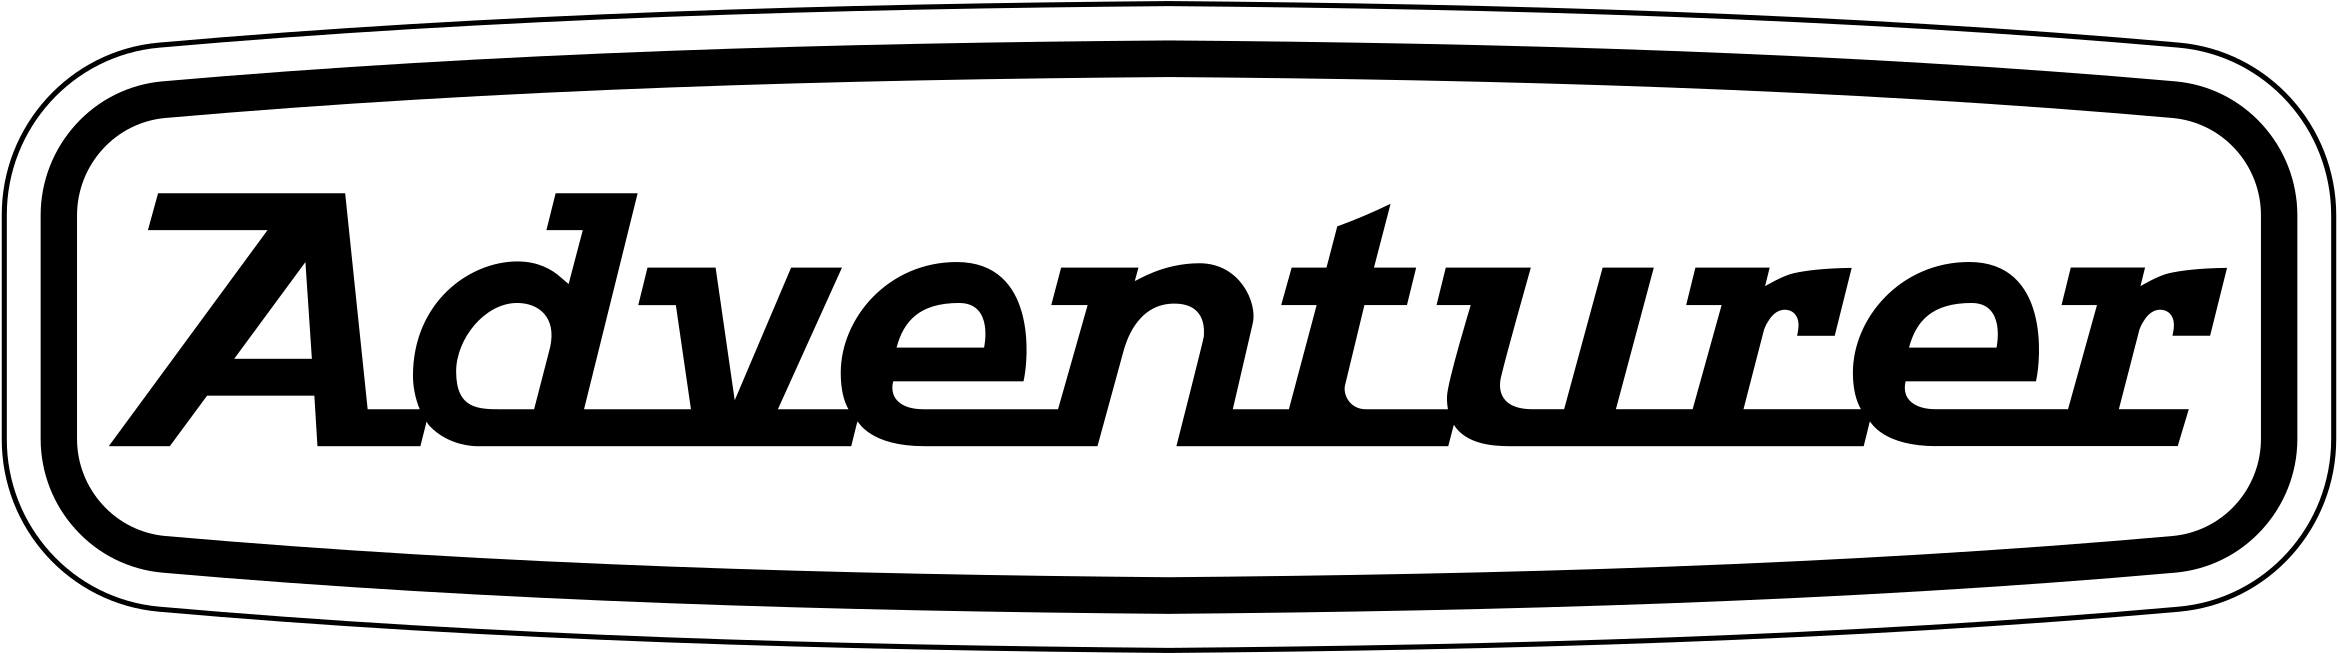 Adventurer 01 Logo Png Transparent - Portable Network Graphics (2400x2400), Png Download